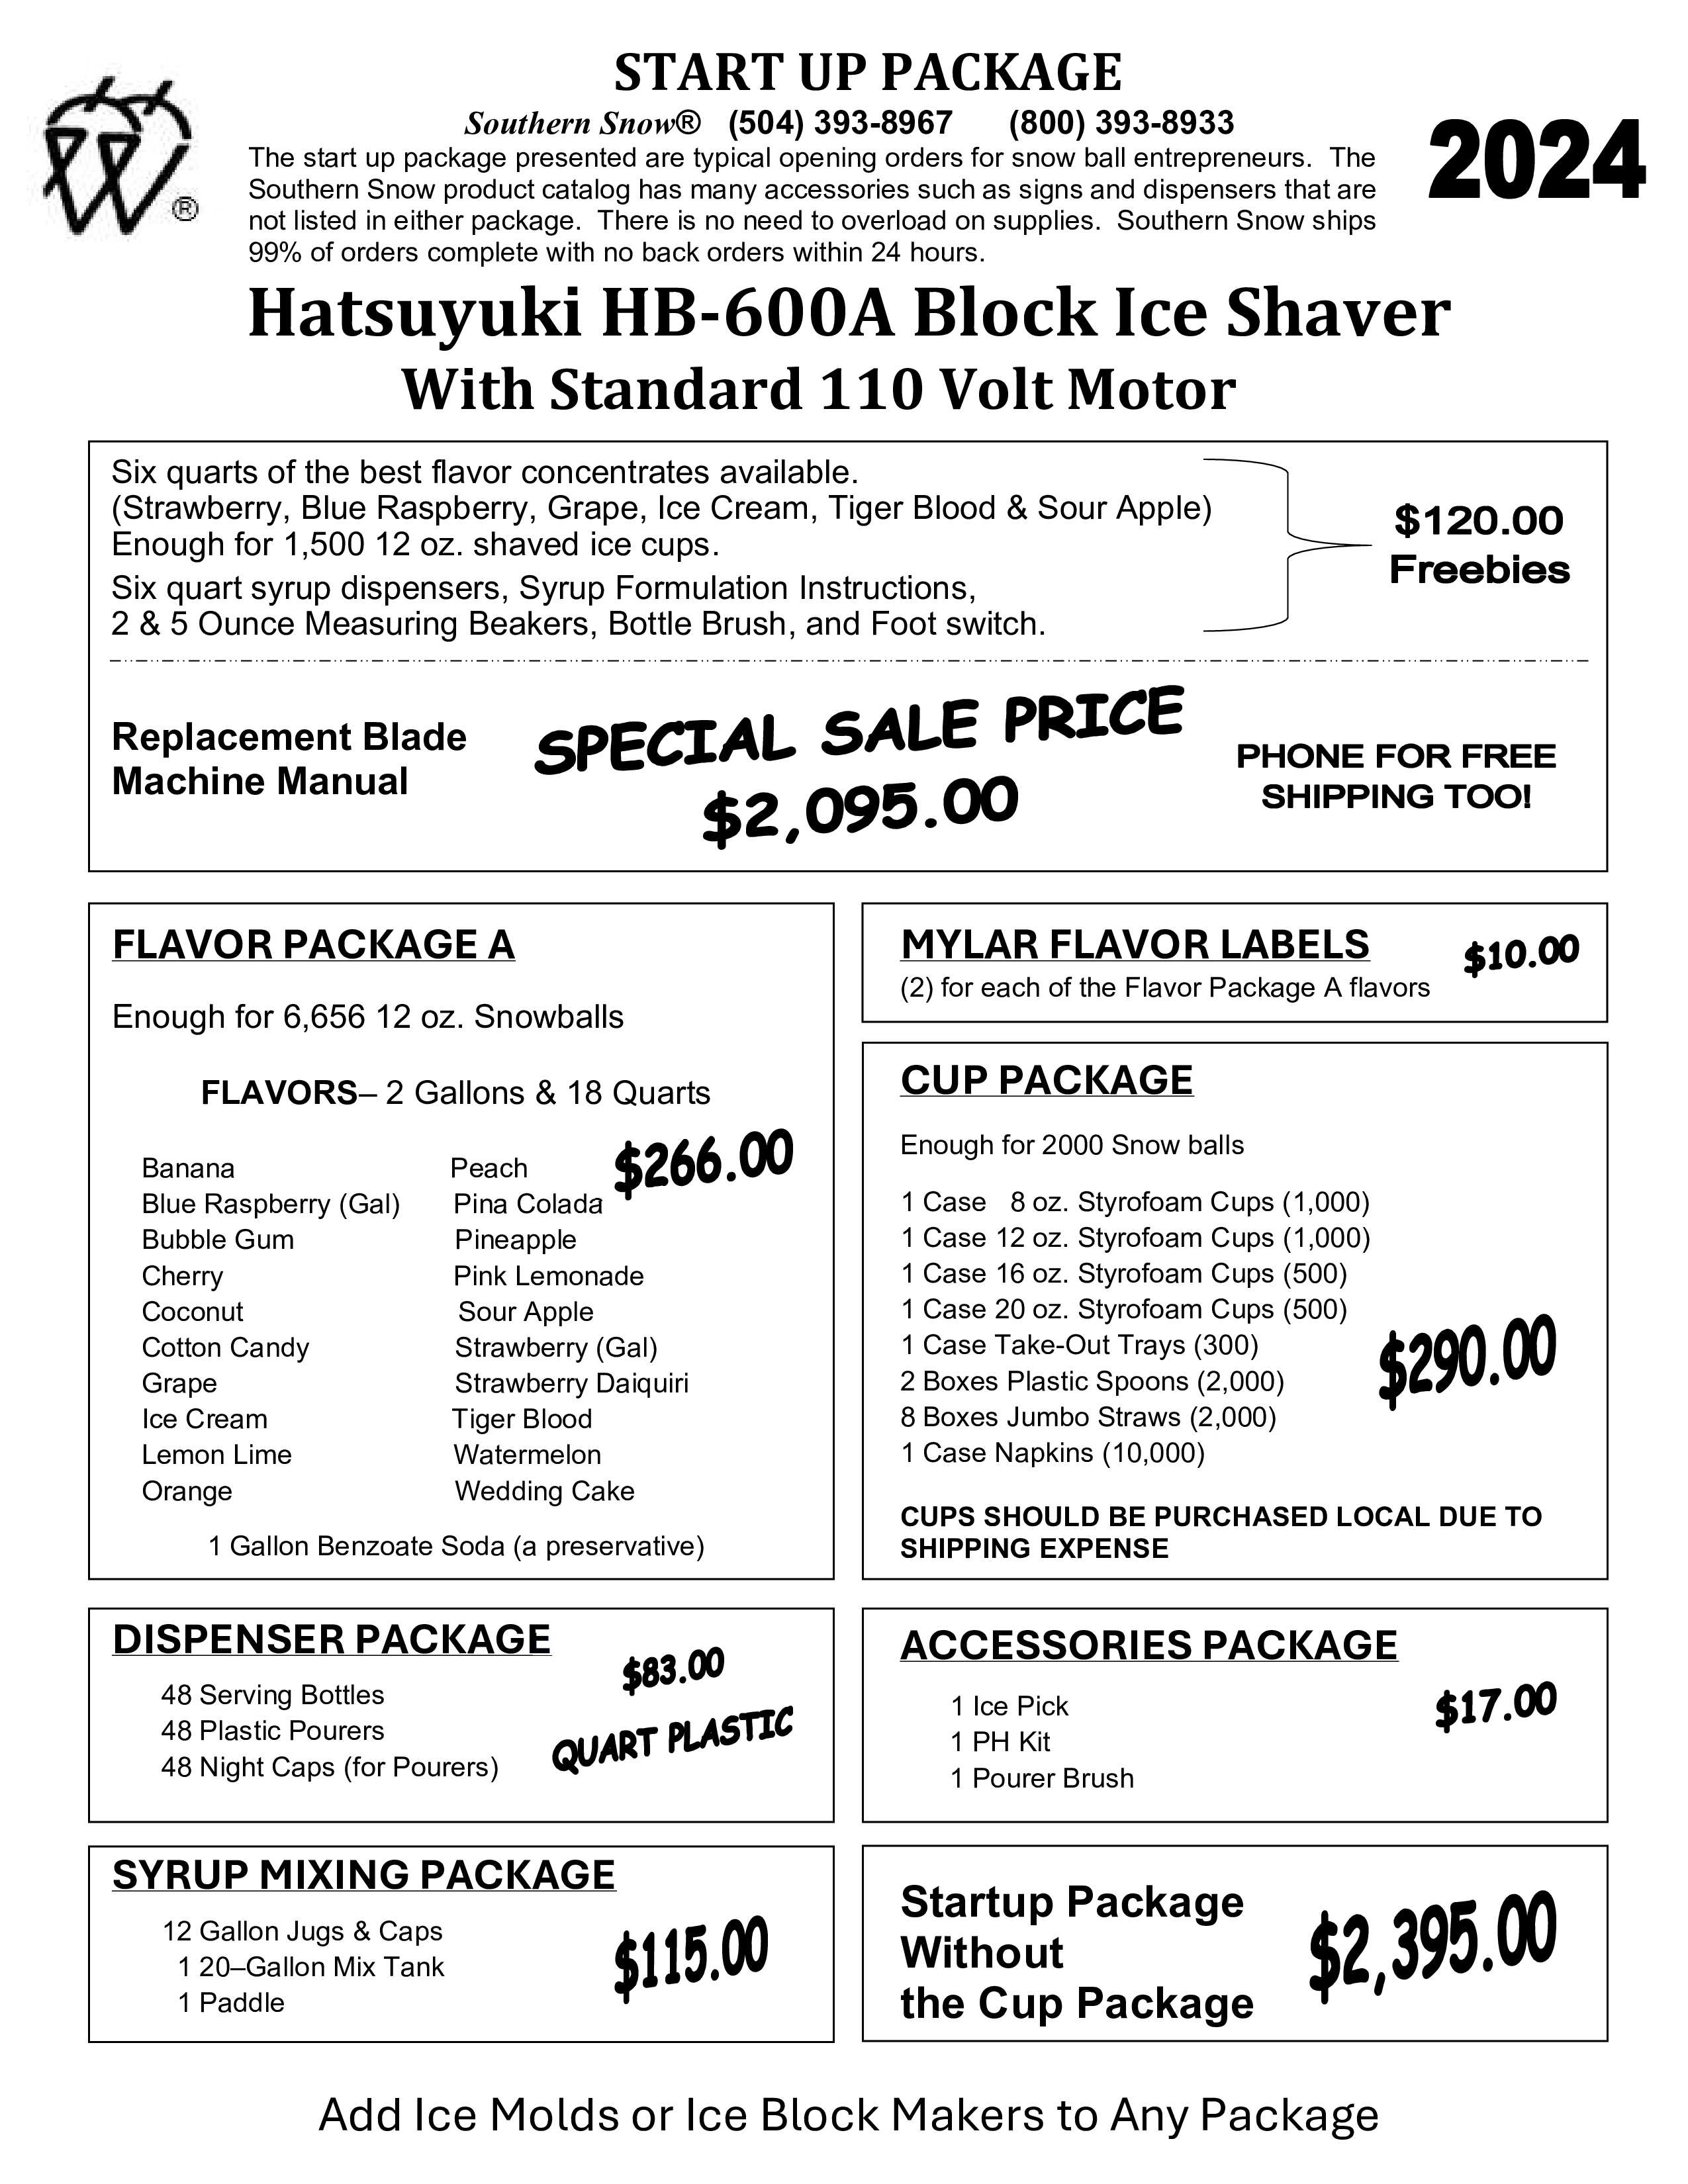 Hatsuyuki HB-600A Block Ice Shaver Start Up